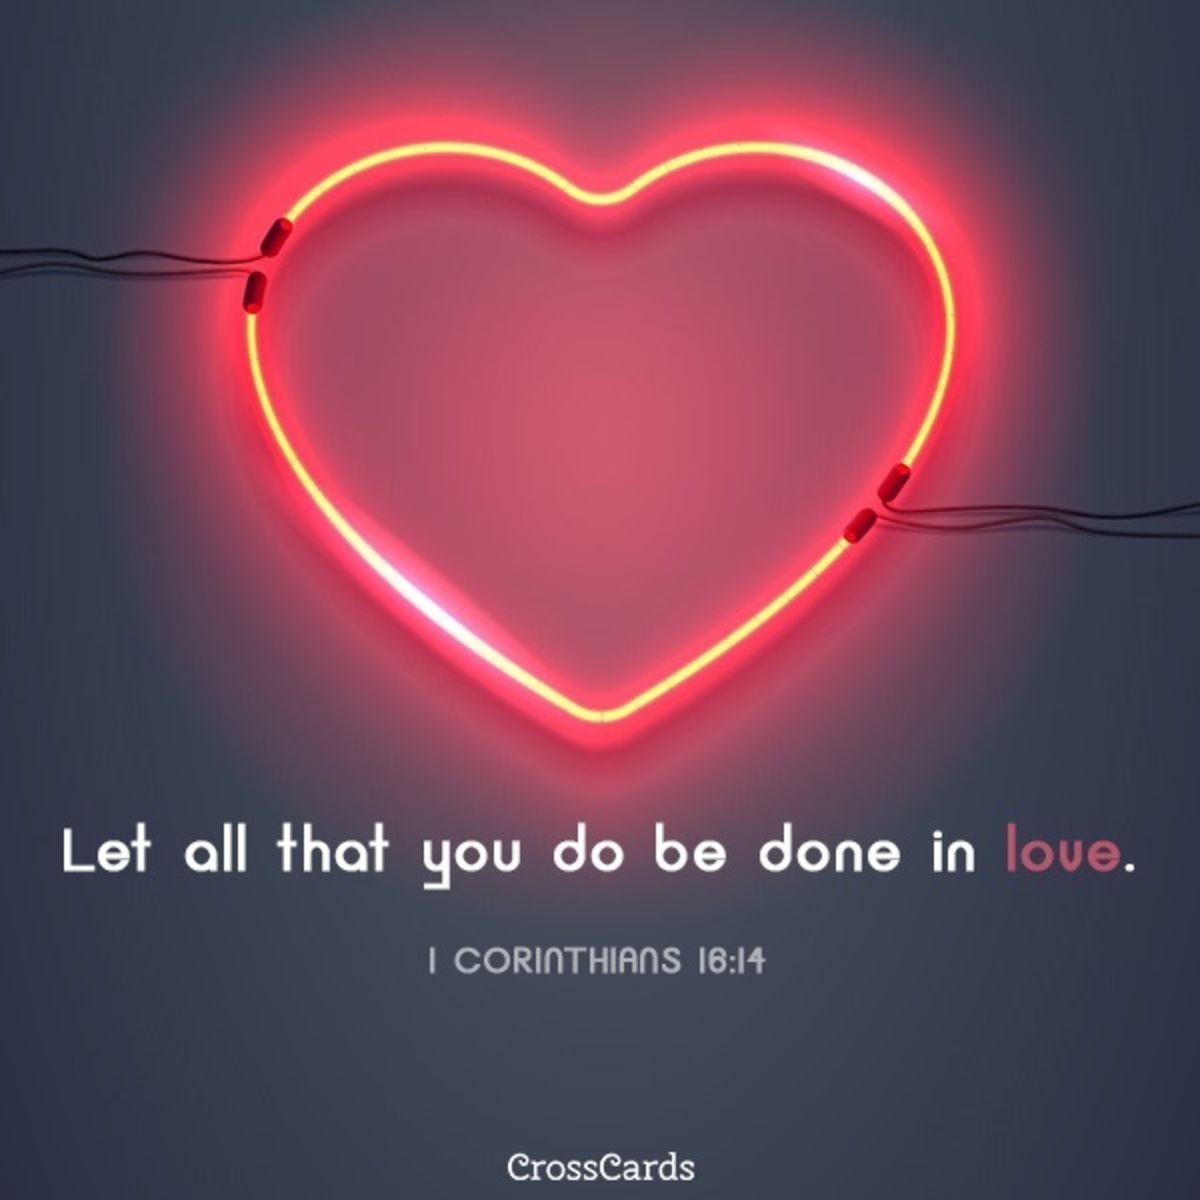 Your Daily Verse - 1 Corinthians 16:14